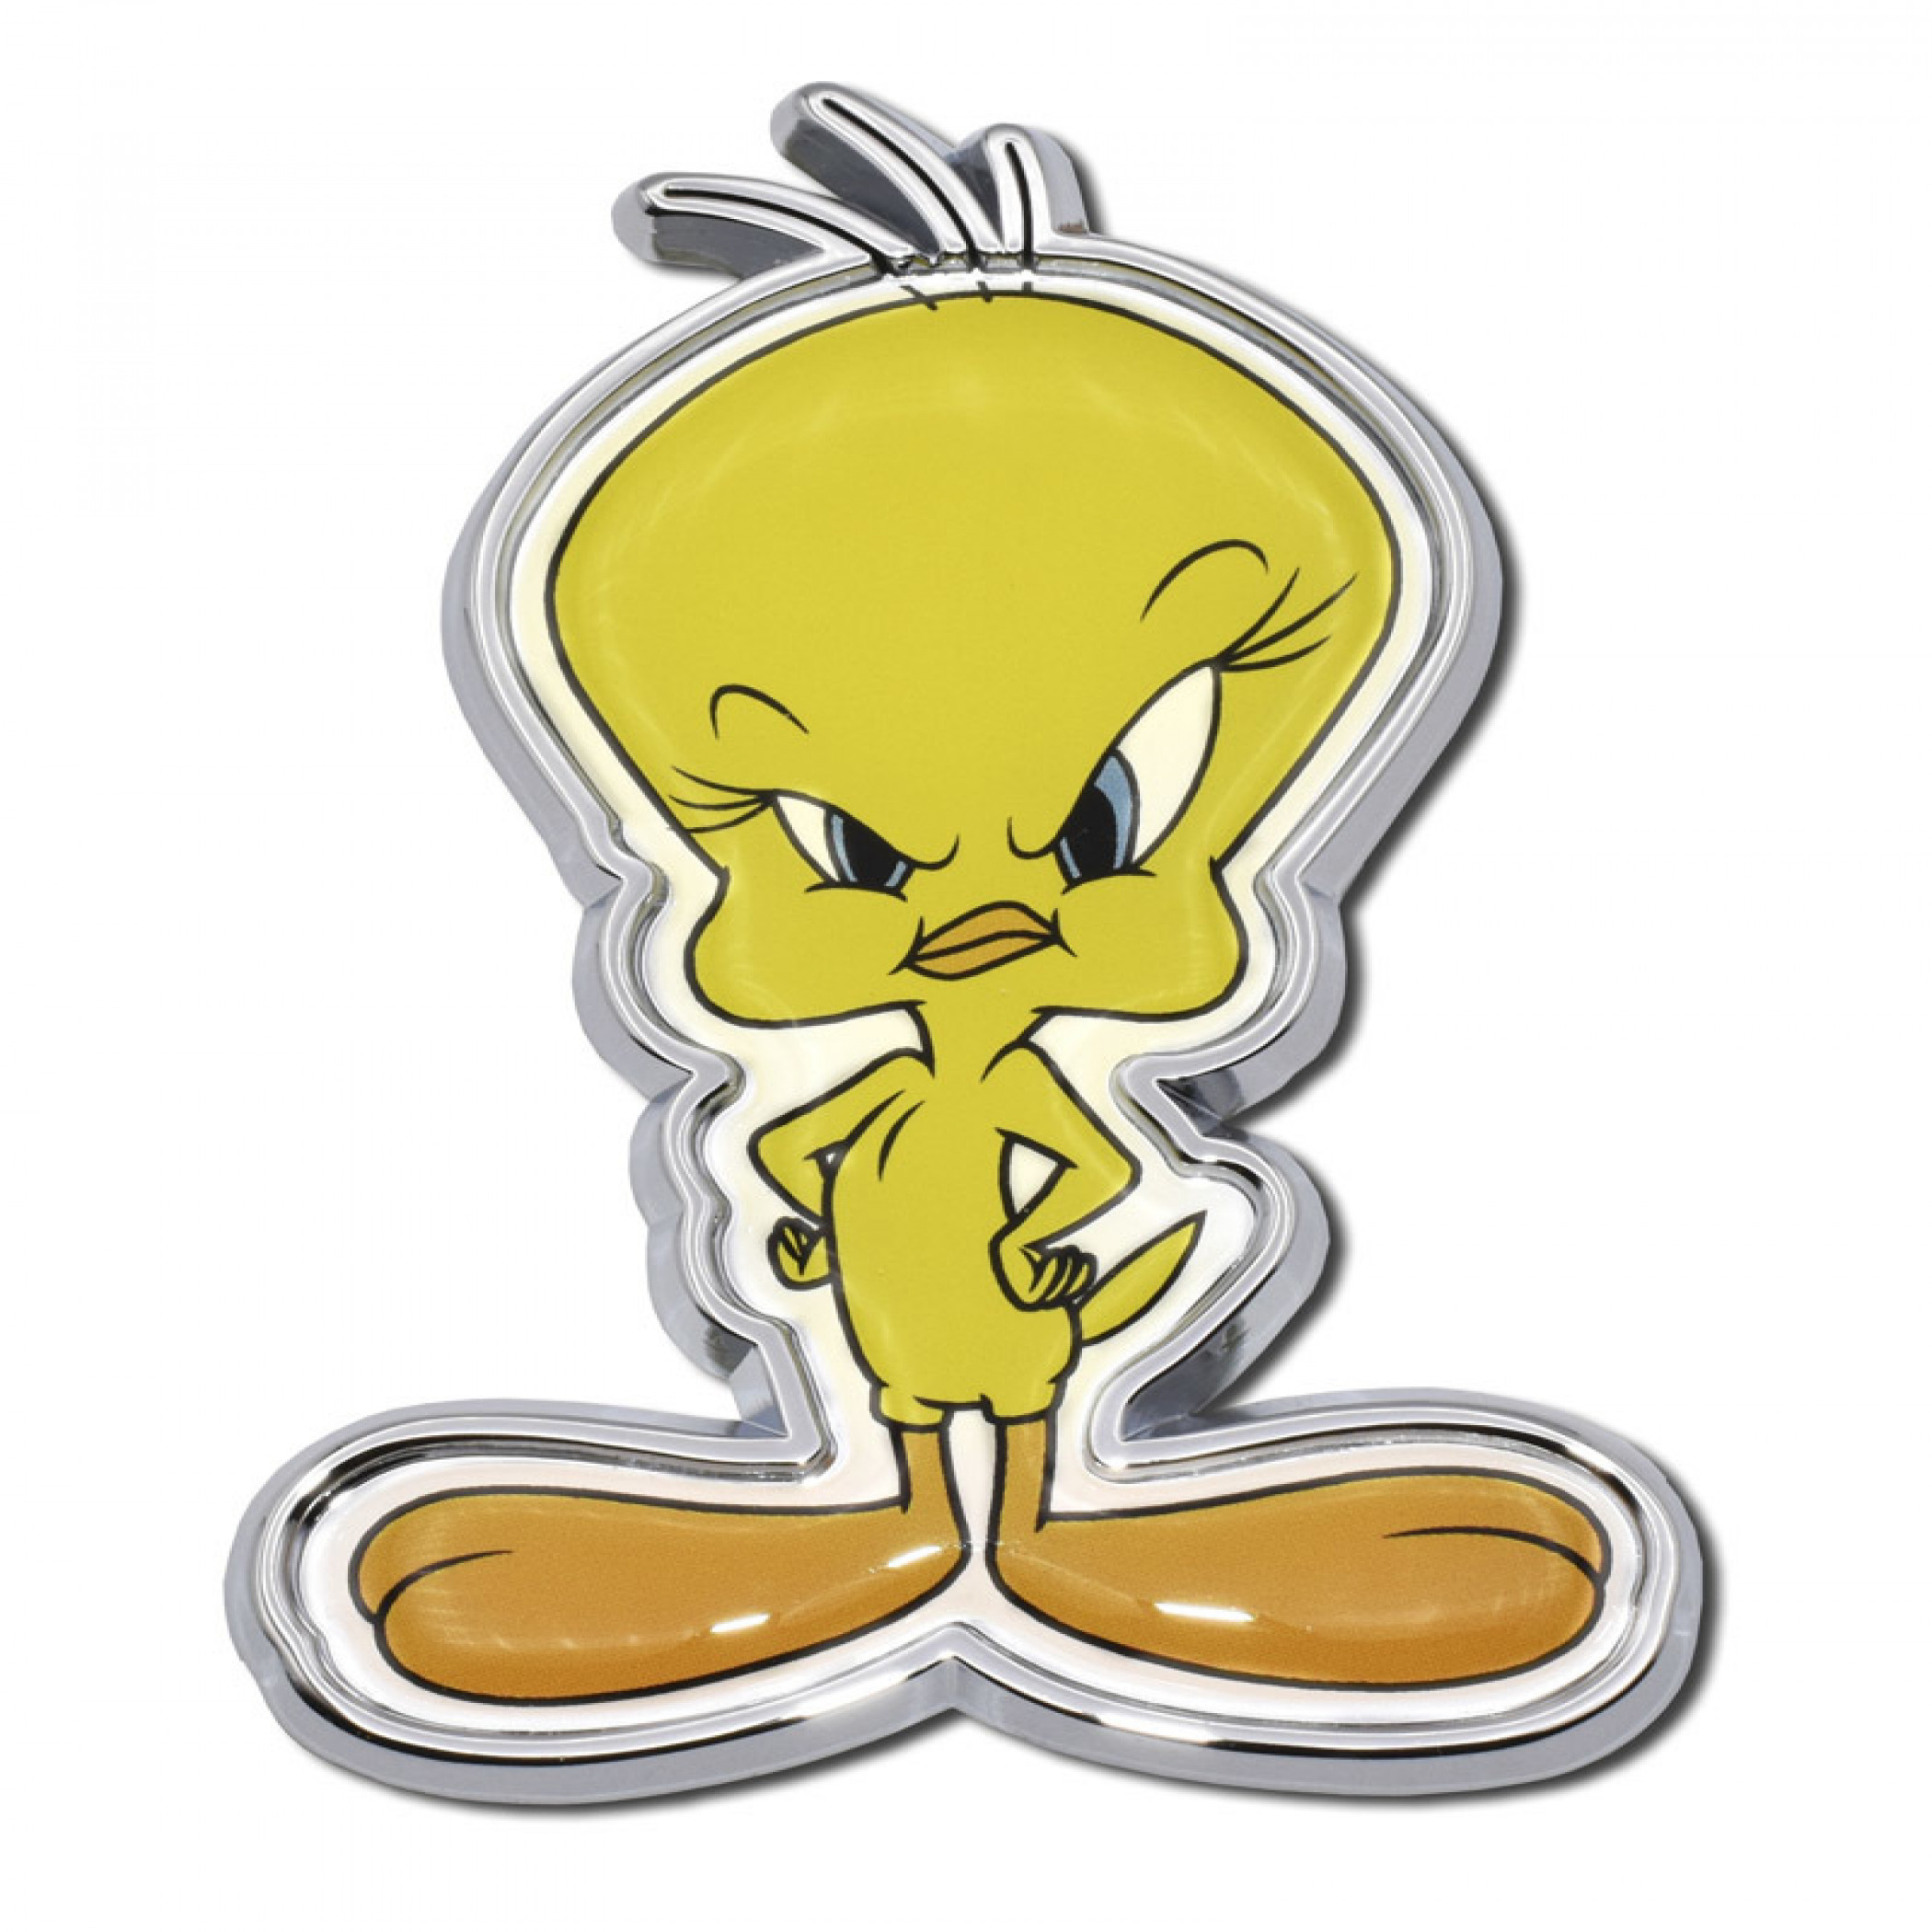 Looney Tunes Tweety Bird Character Elektroplate Chrome Car Emblem